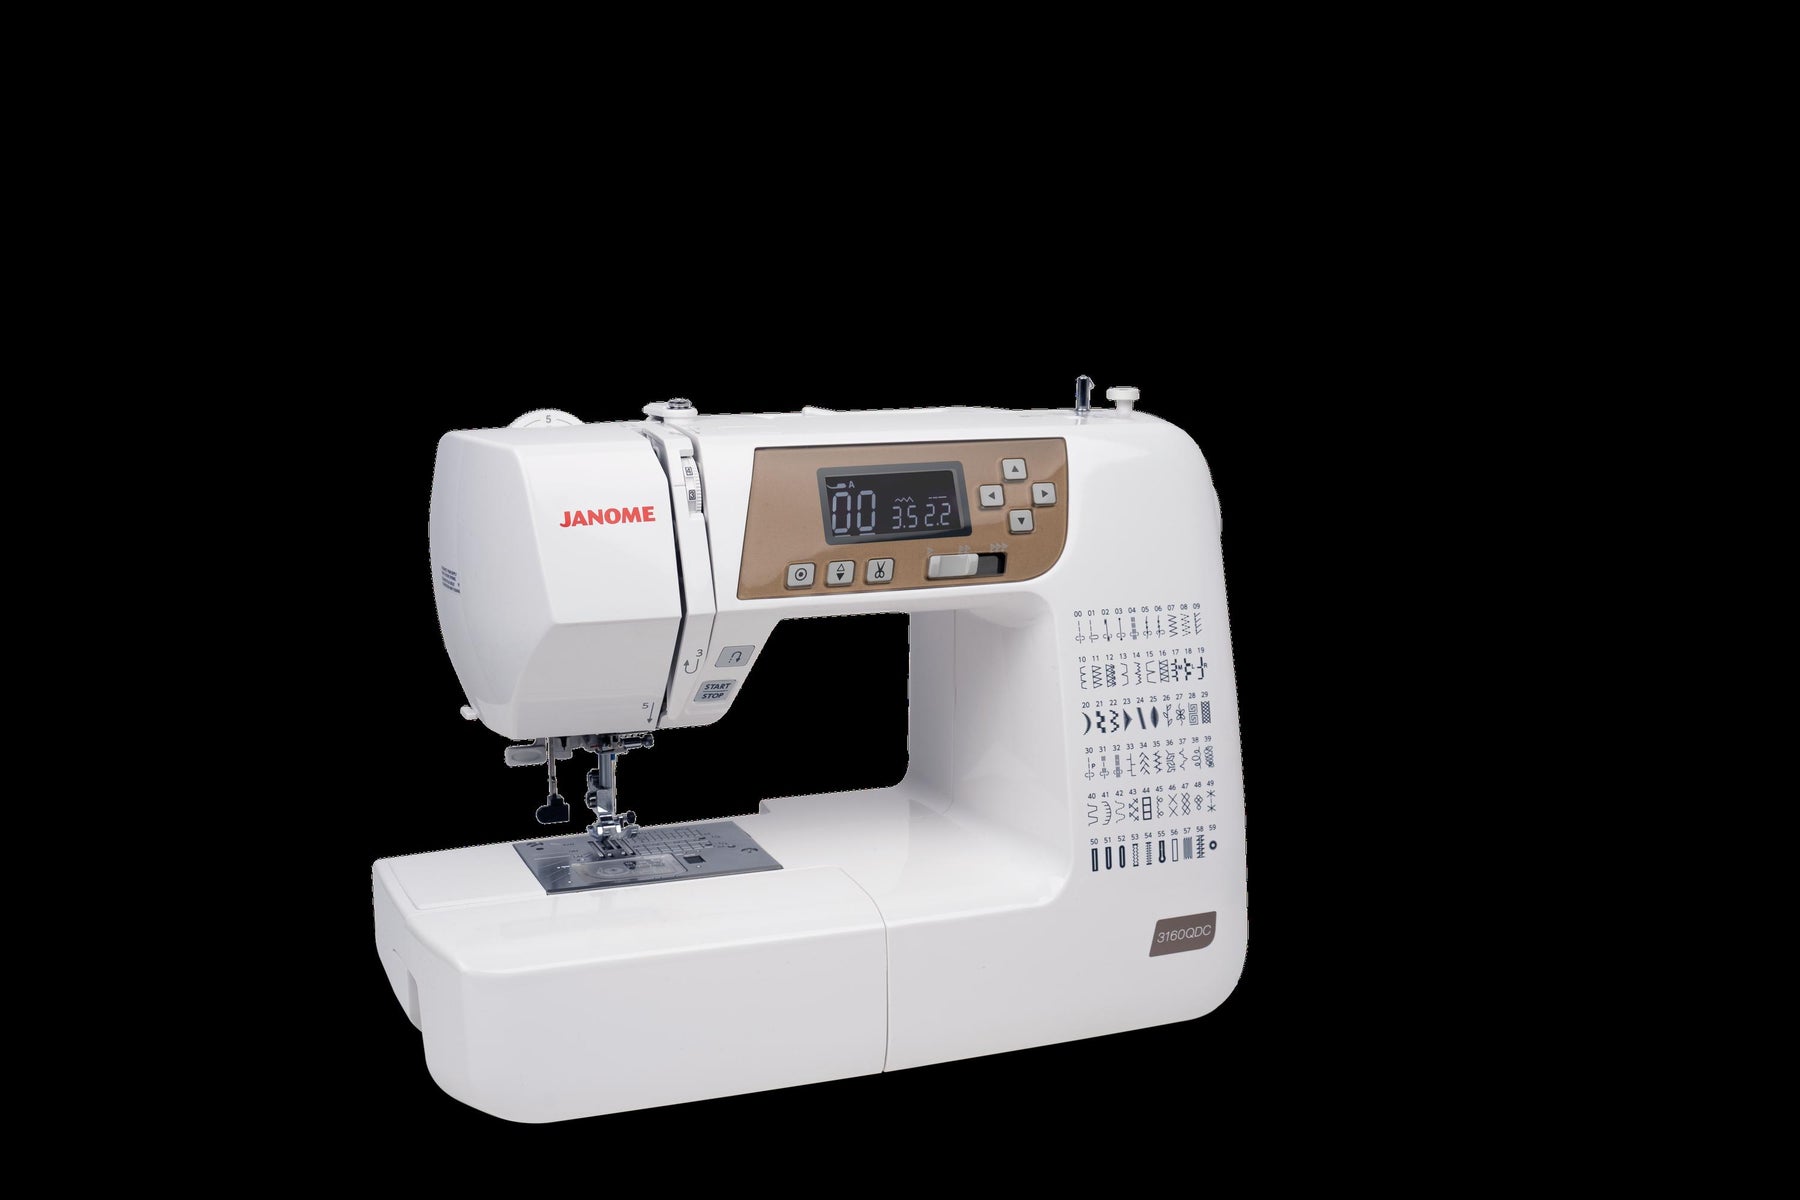 Janome 3160QDC-T Computerized Sewing Machine 